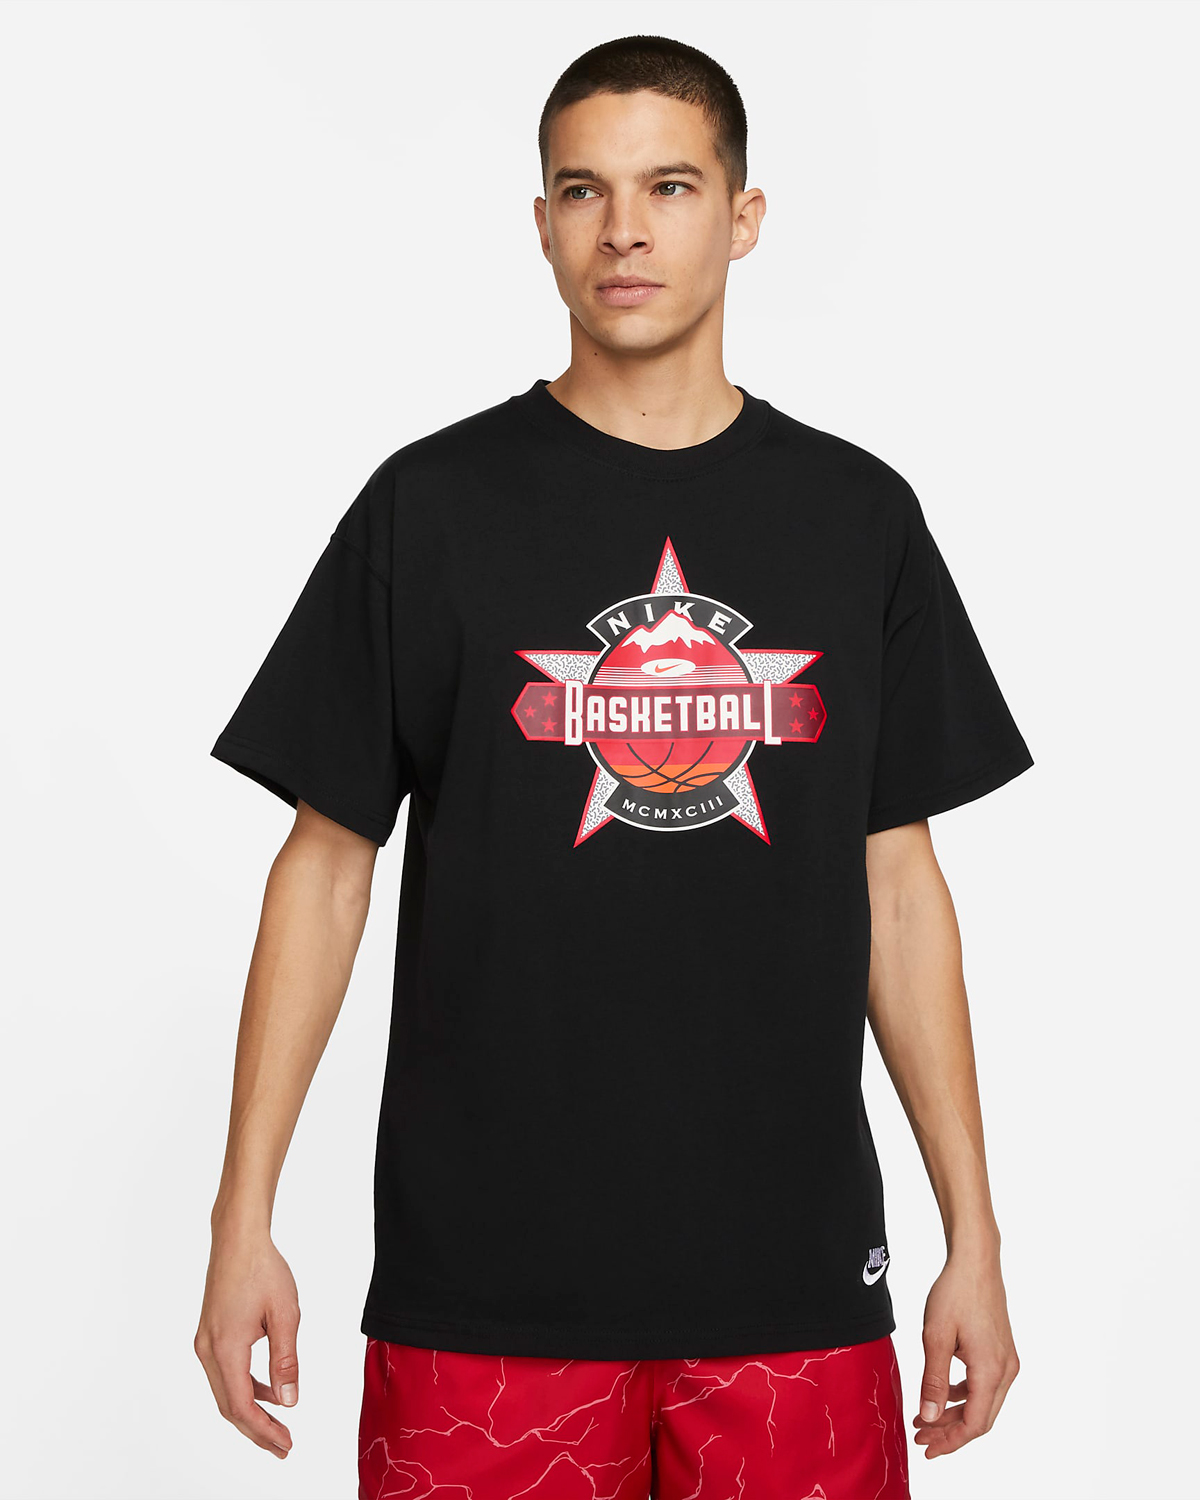 Nike-Sportswear-Max-90-Basketball-T-Shirt-Black-University-Red